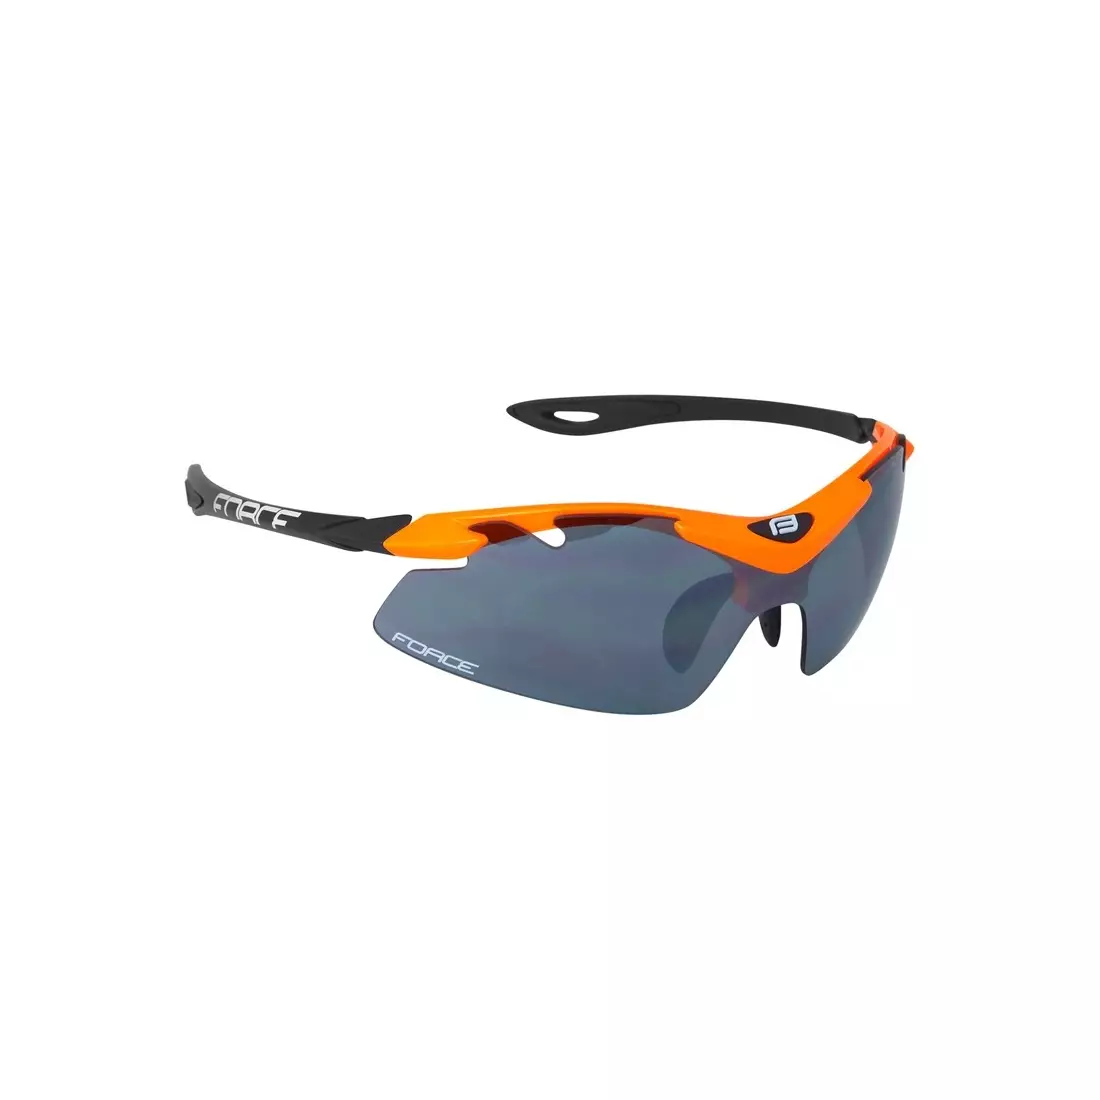 FORCE DUKE Glasses, orange and black 91022